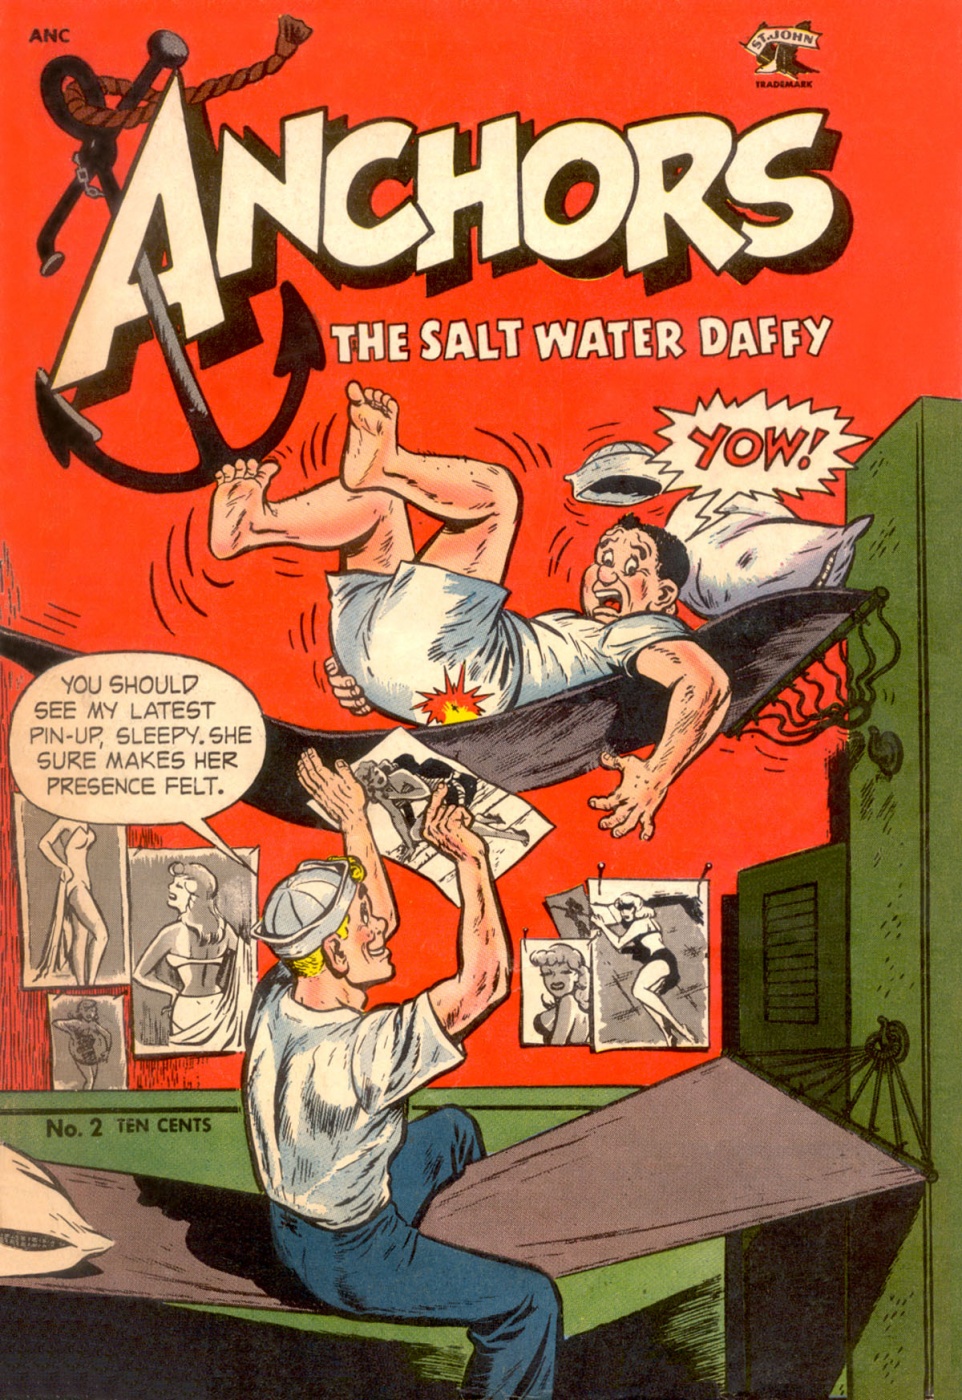 Anchors the Salt Water Daffy - Comics (1)